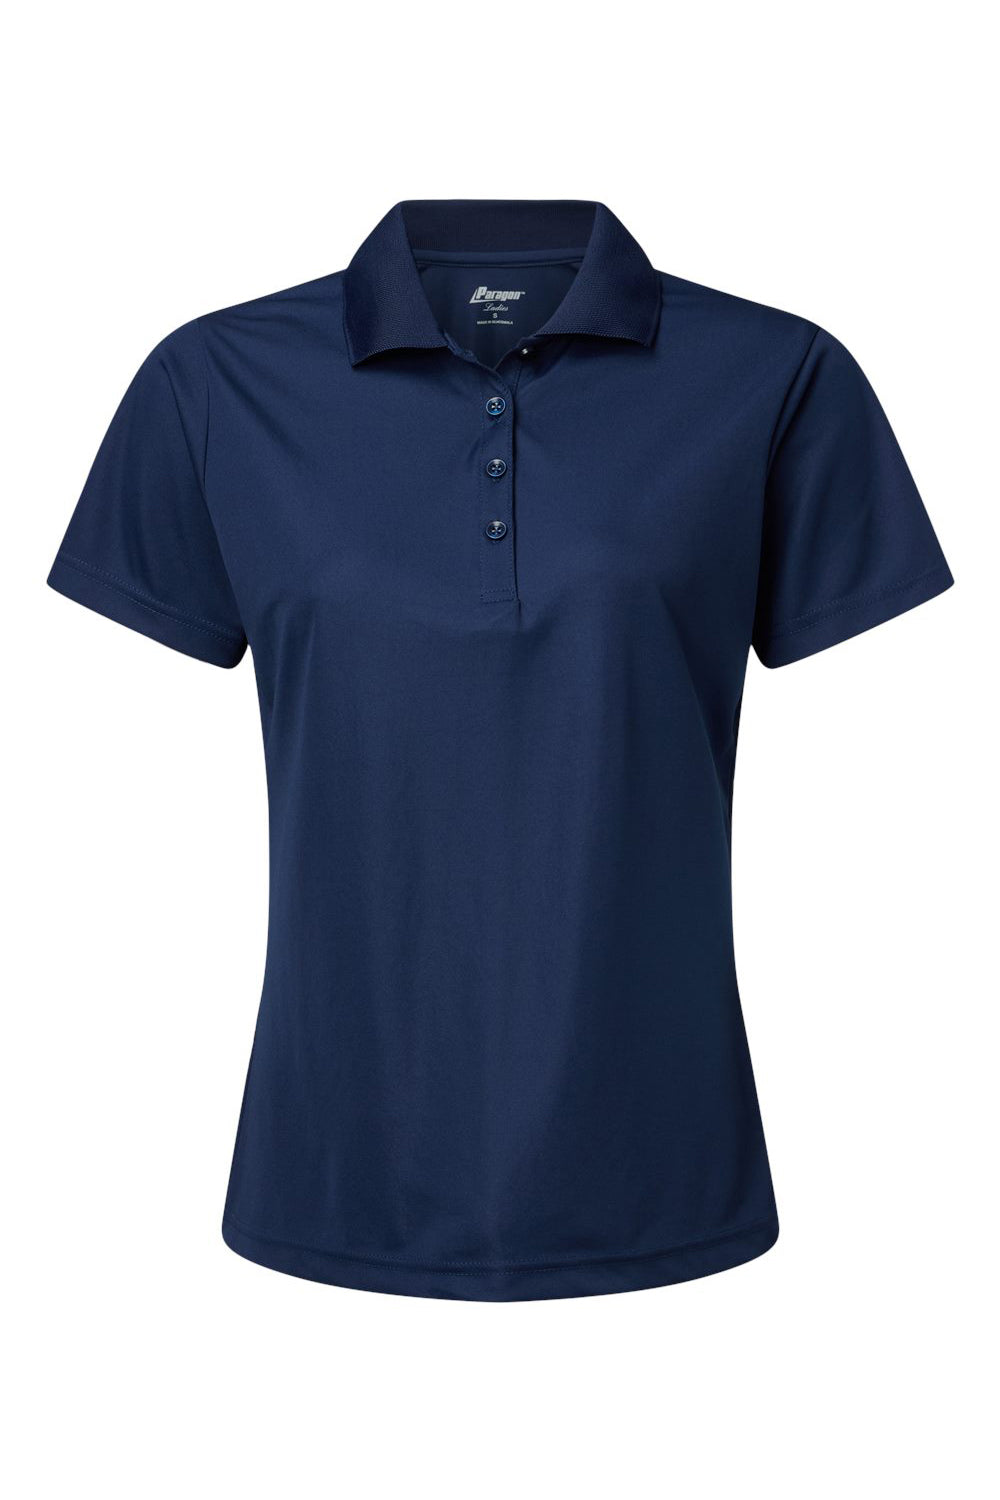 Paragon 504 Womens Sebring Performance Short Sleeve Polo Shirt Deep Navy Blue Flat Front